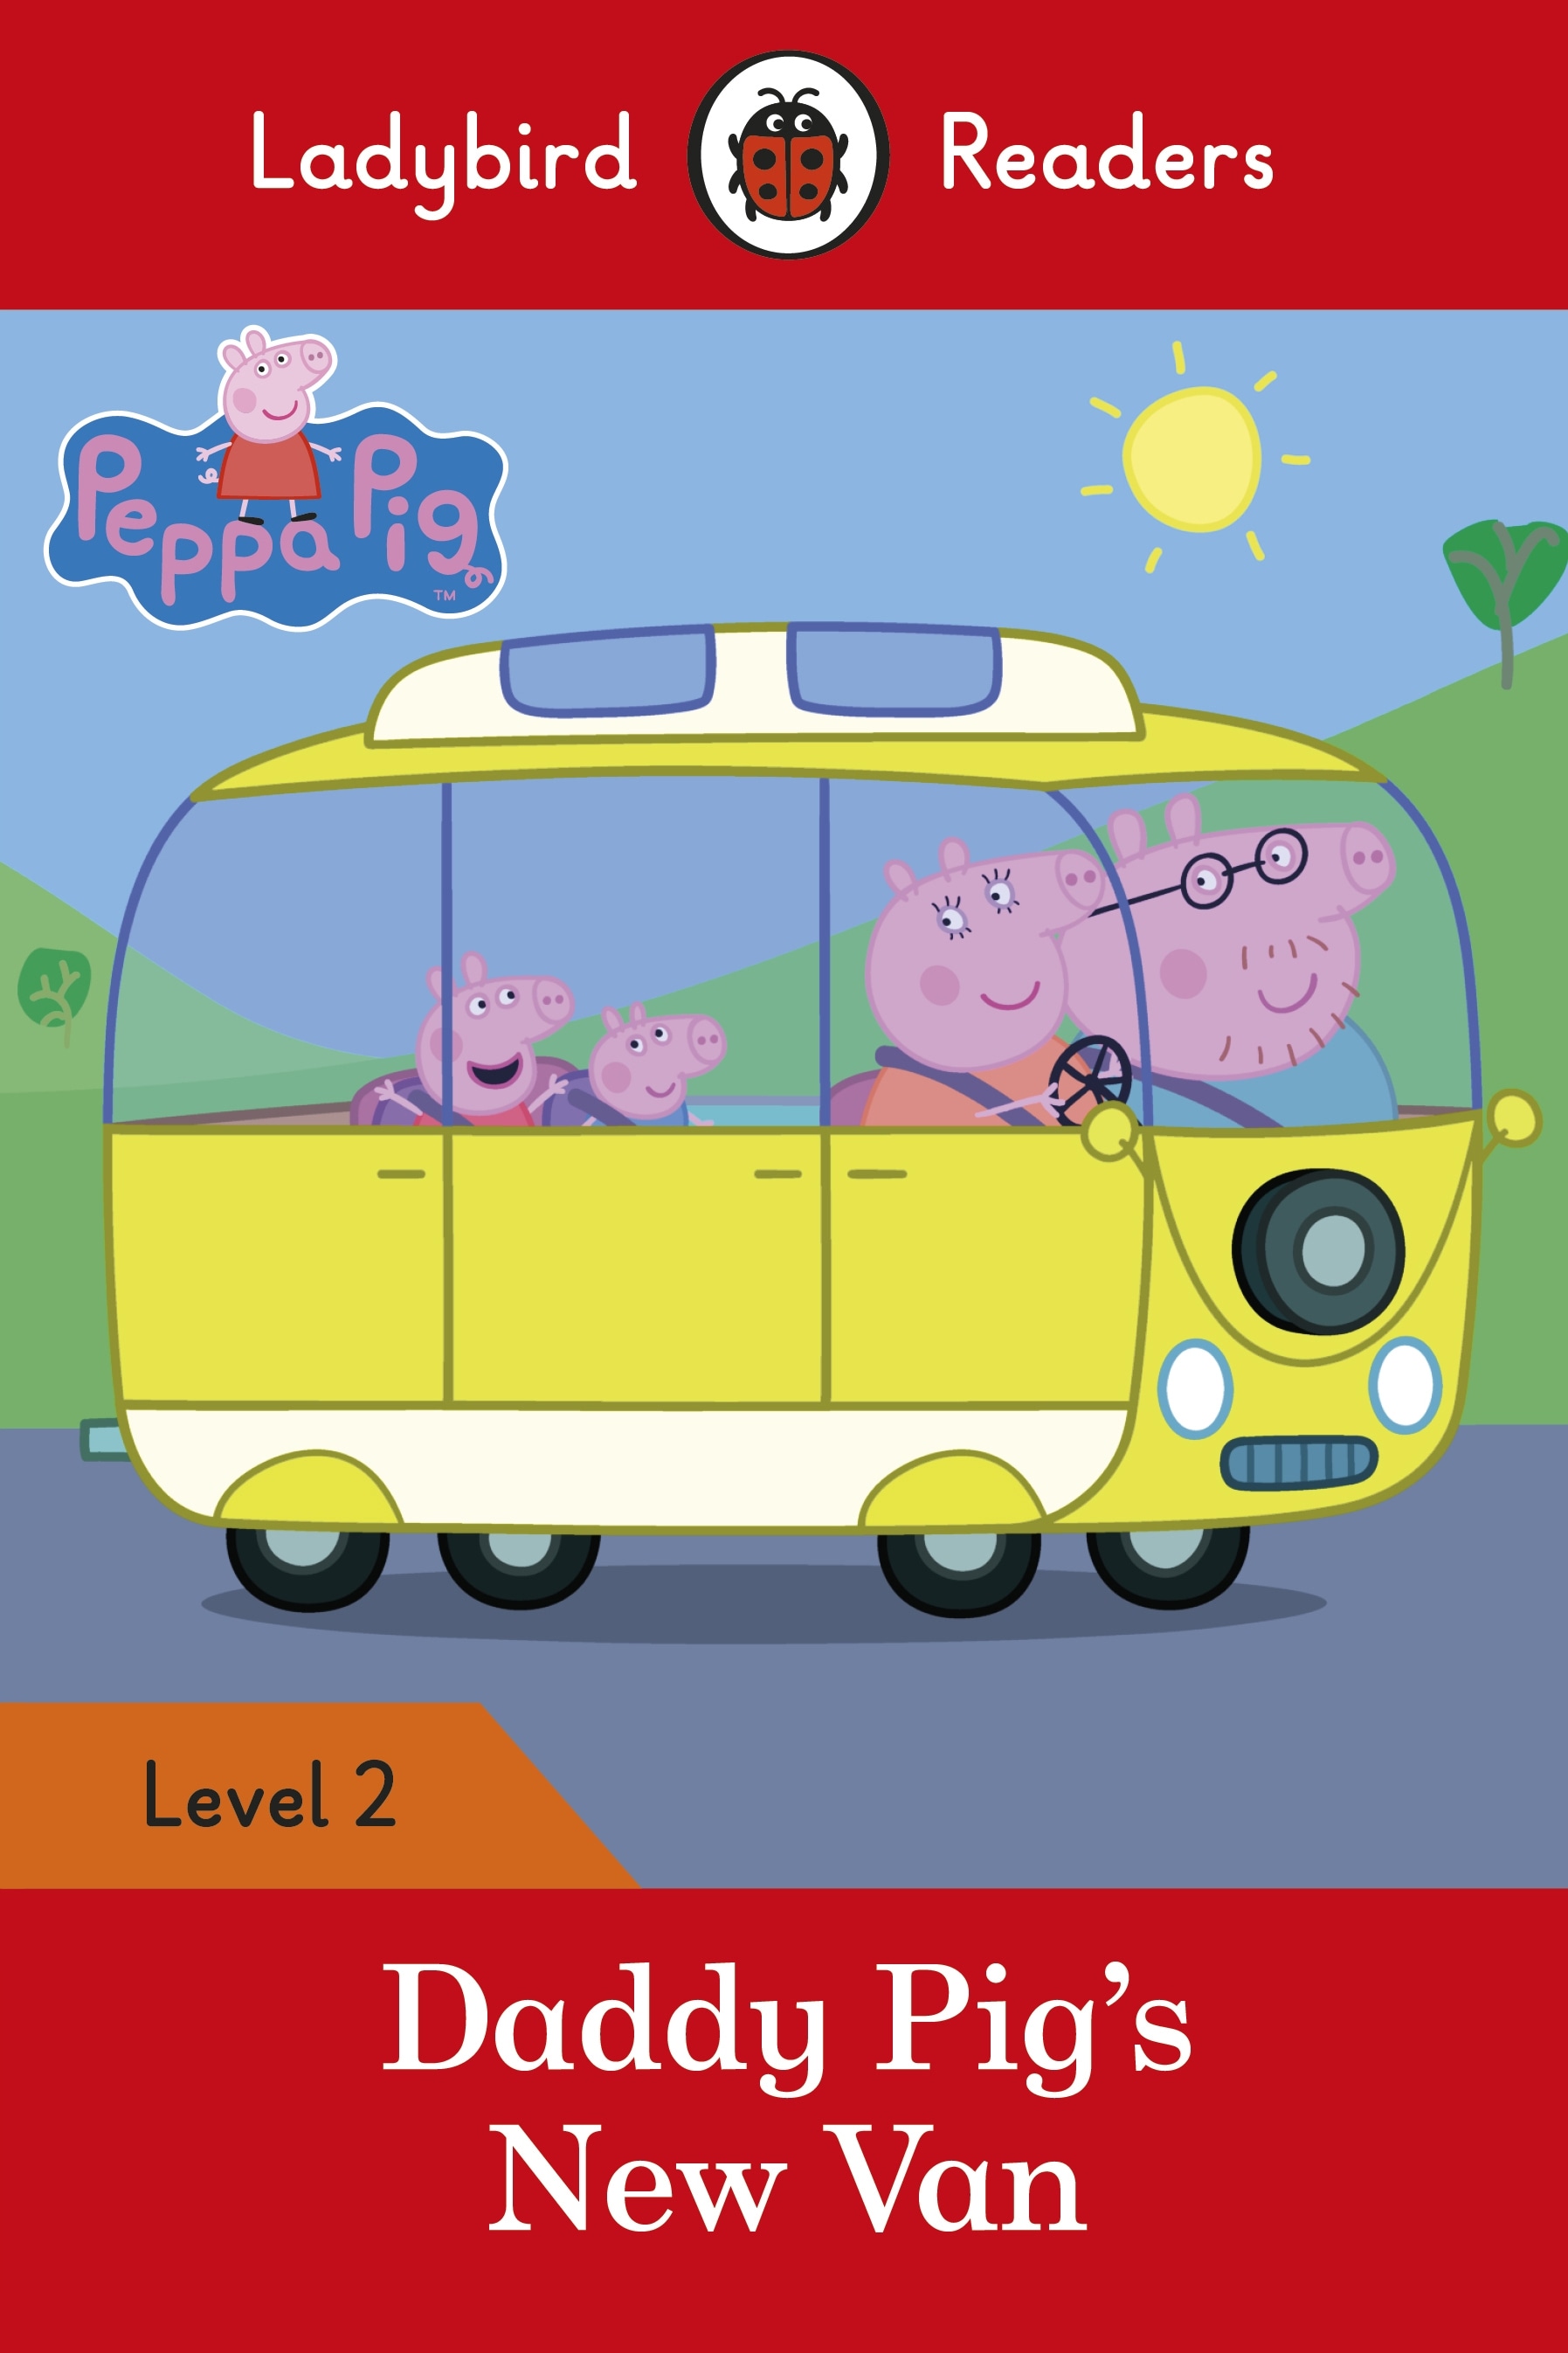 Book “Peppa Pig: Daddy Pig's New Van - Ladybird Readers Level 2” by Ladybird, Peppa Pig — January 26, 2017